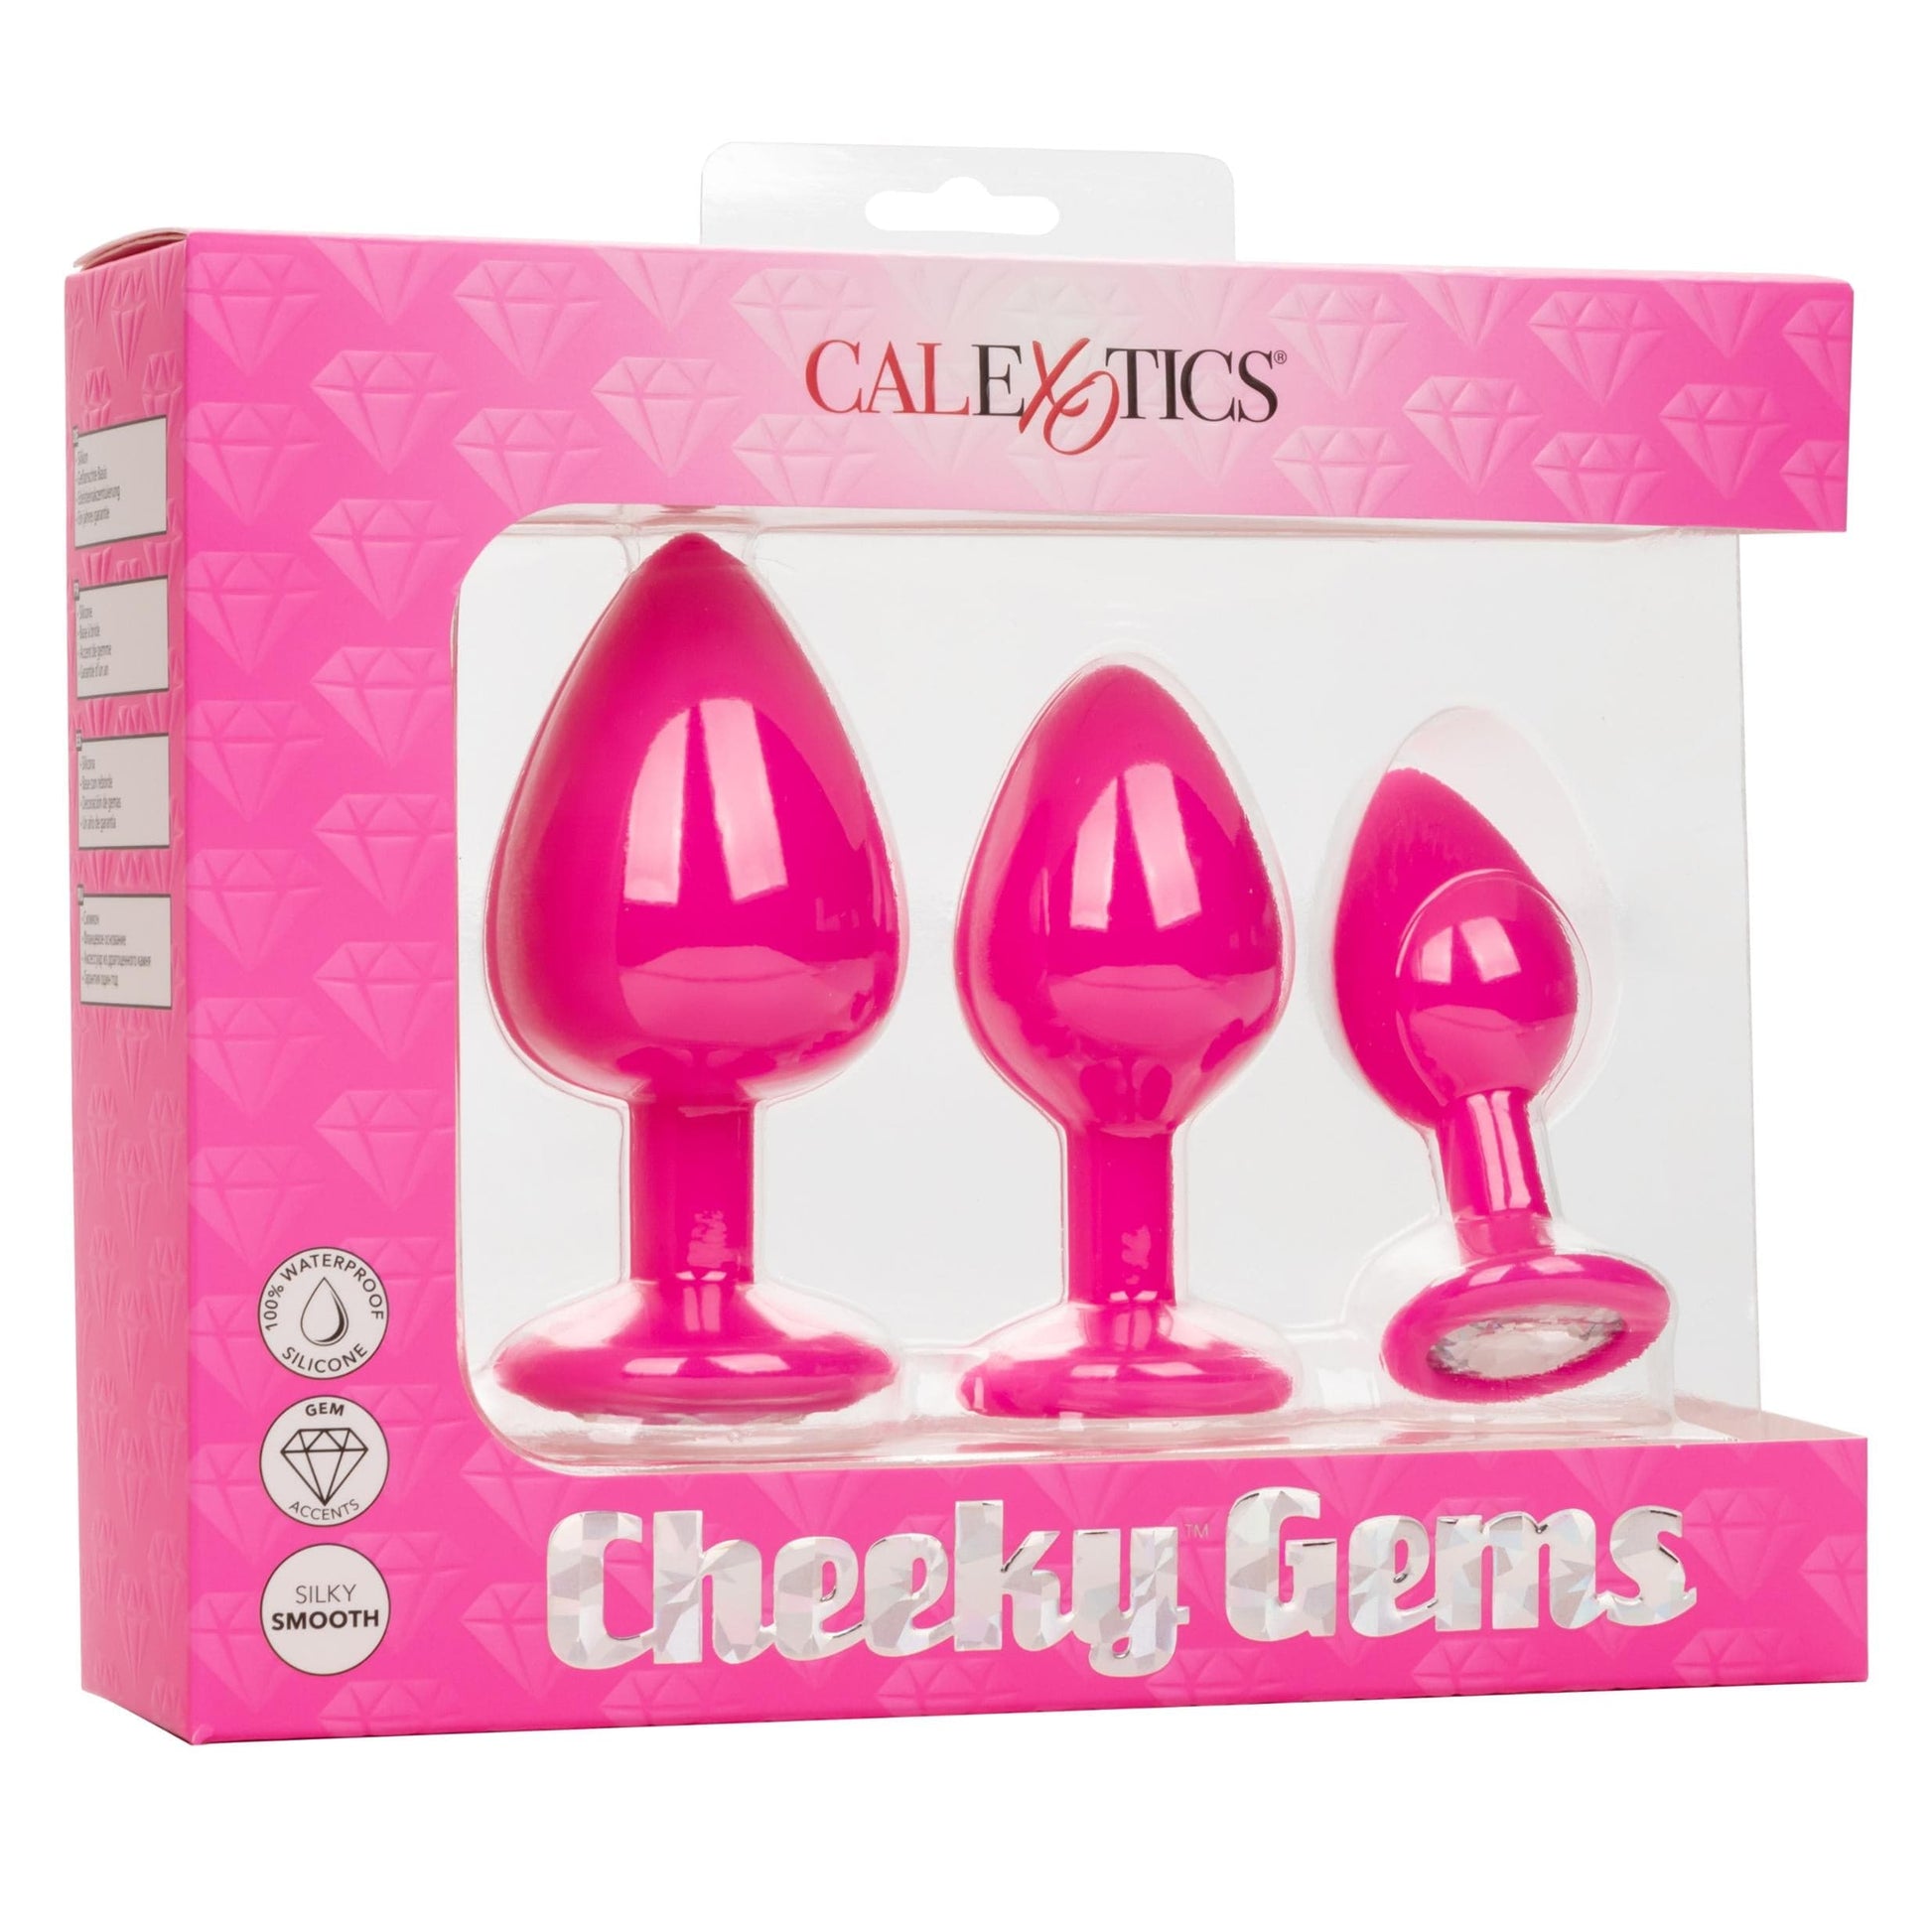 cheeky gems pink